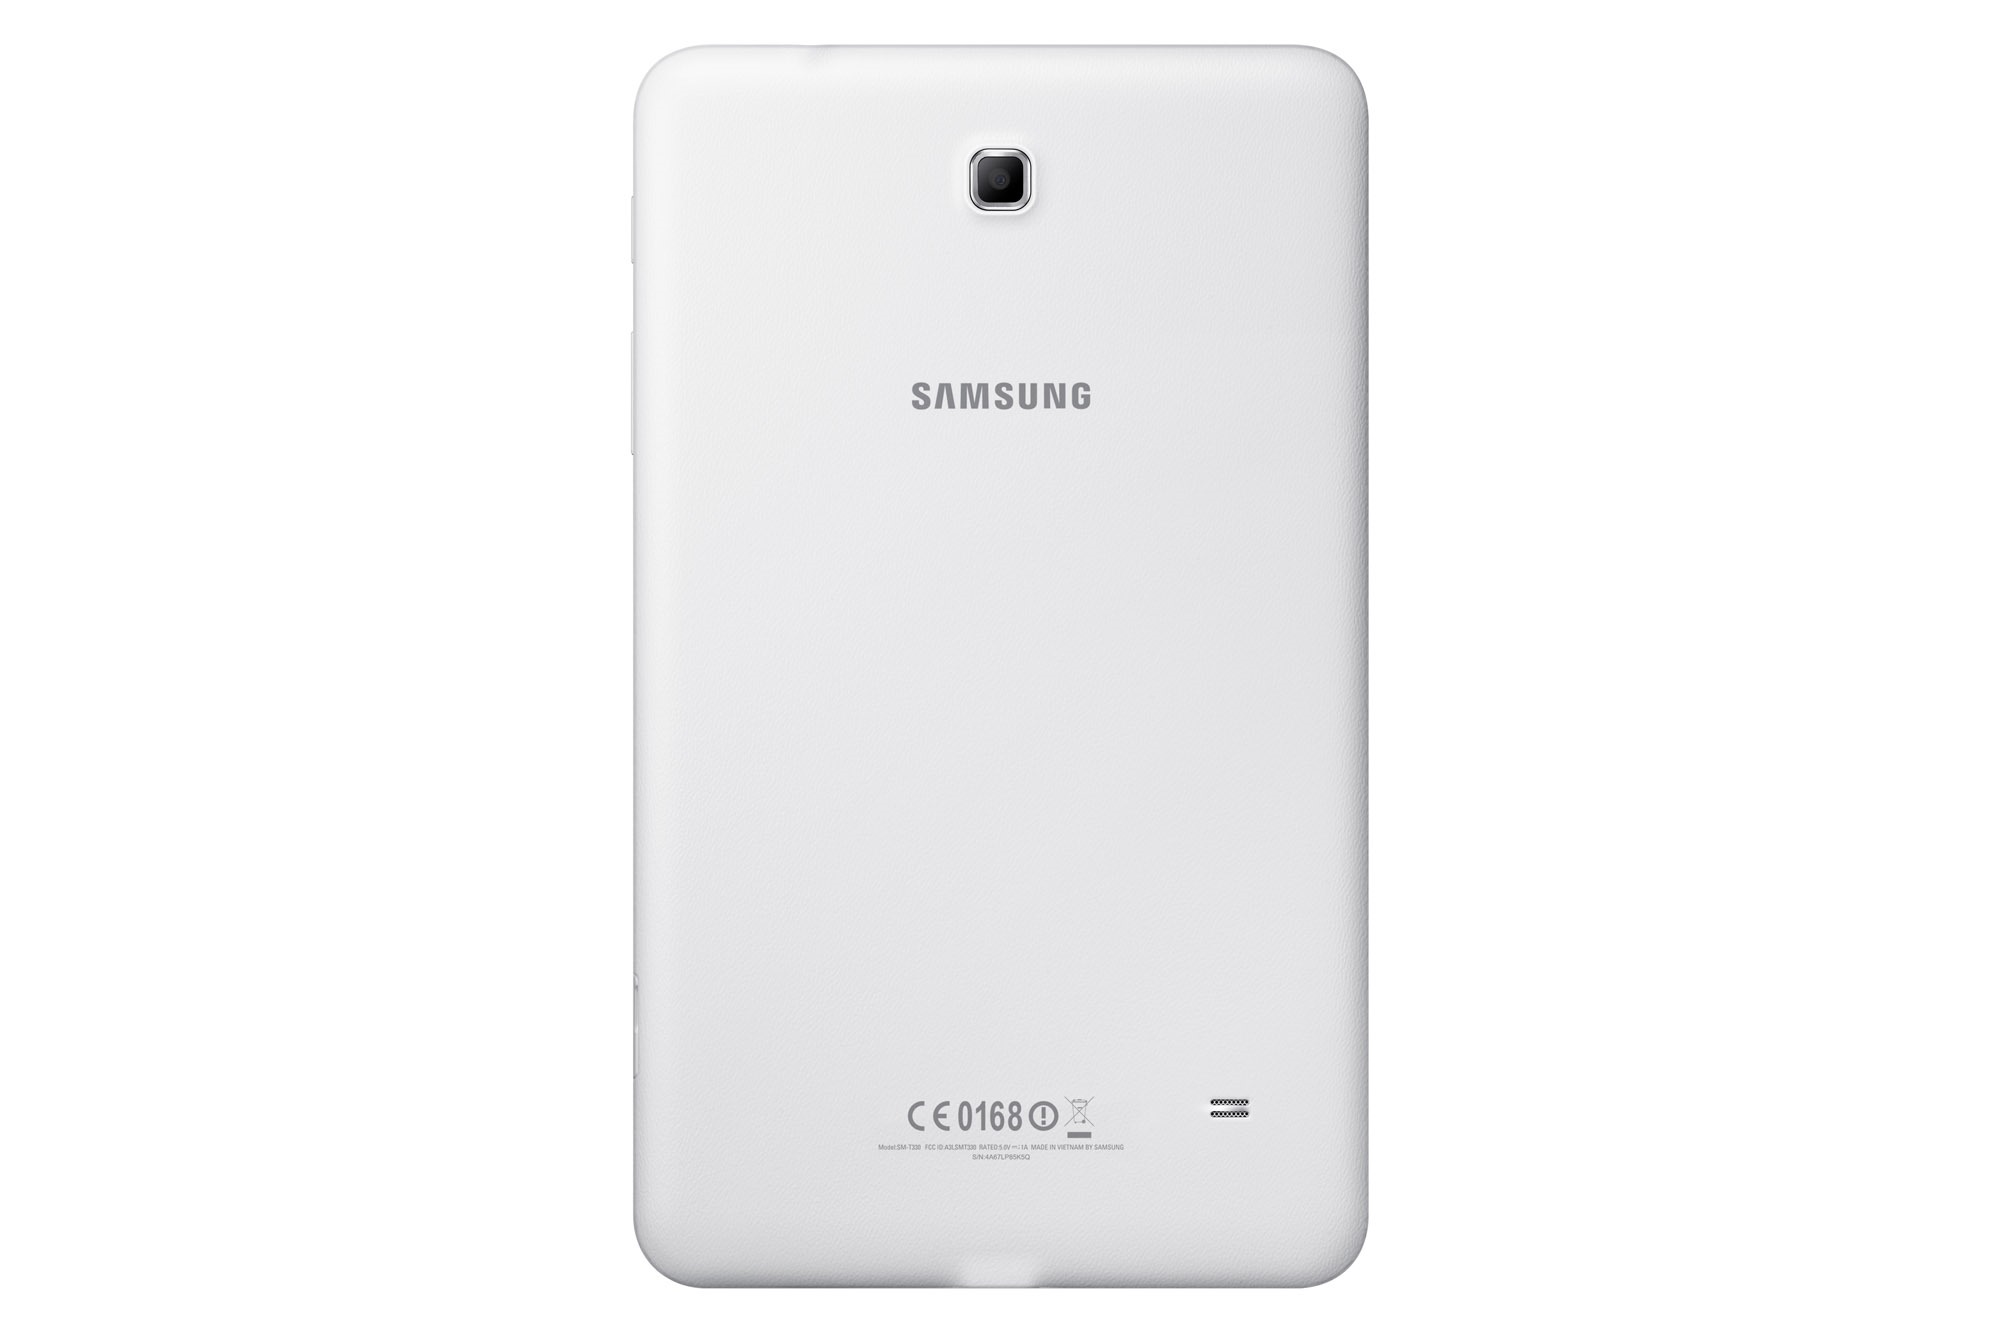 Samsung Galaxy Tab 4 10 Inch User Manual